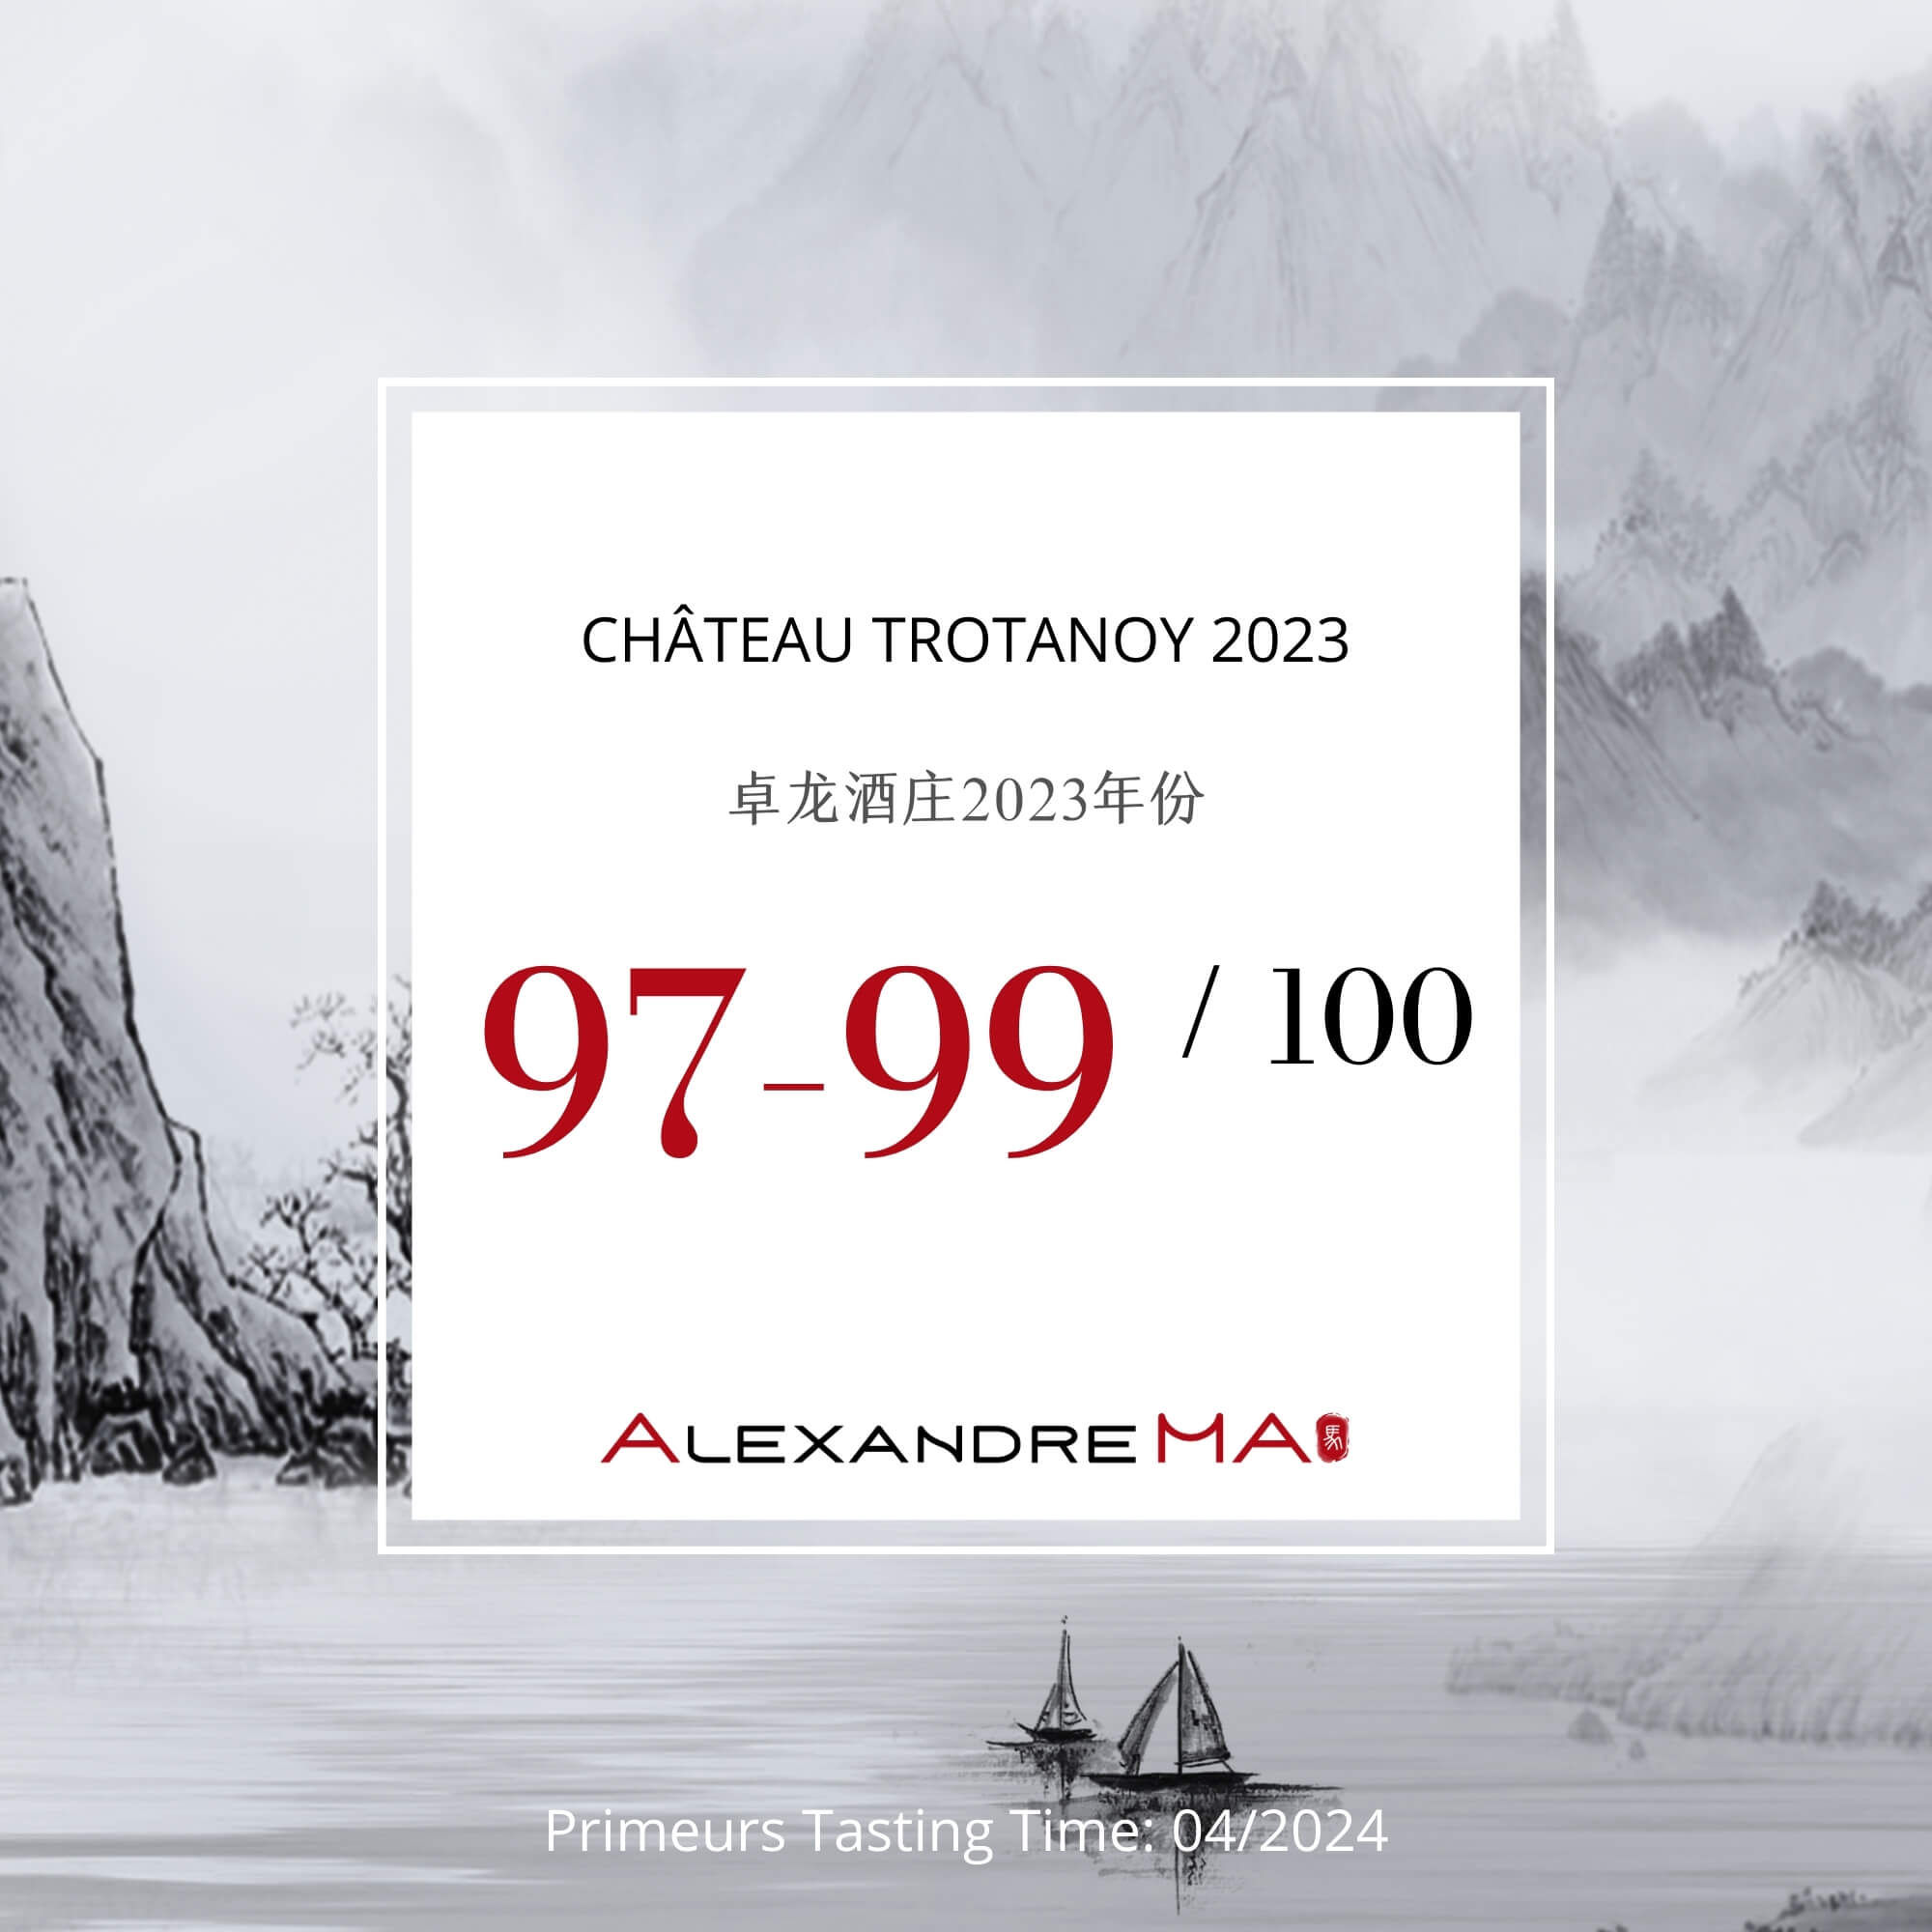 Château Trotanoy 2023 Primeurs - Alexandre MA